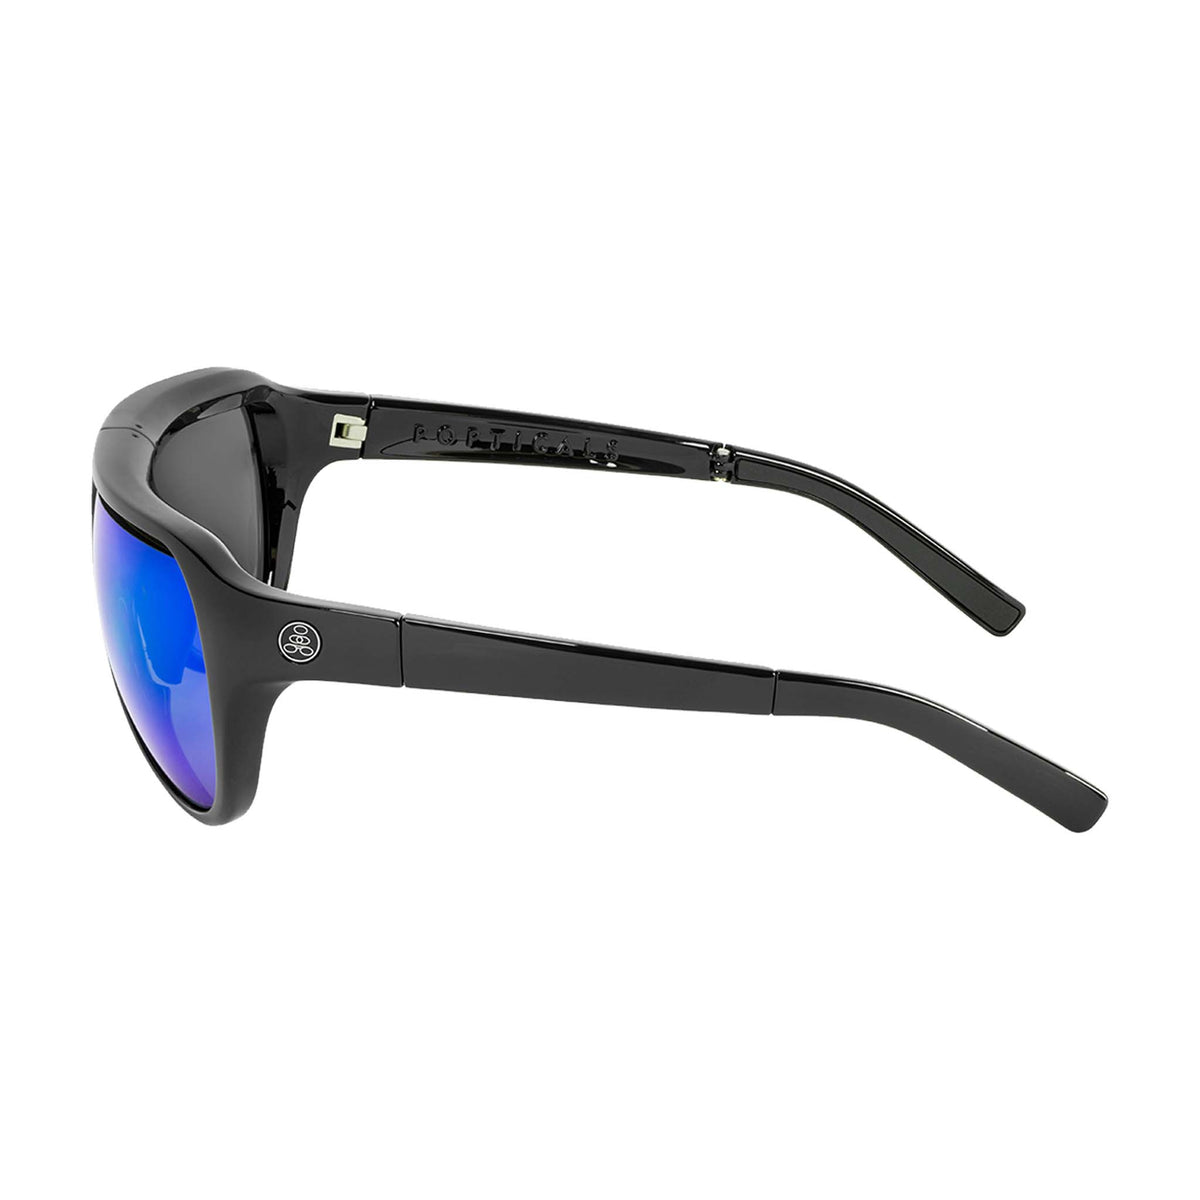 Popticals, Premium Compact Sunglasses, PopAir, 300010-BGUN, Polarized Sunglasses, Gloss Black Frame, Gray Lenses with Blue Mirror Finish, Side View